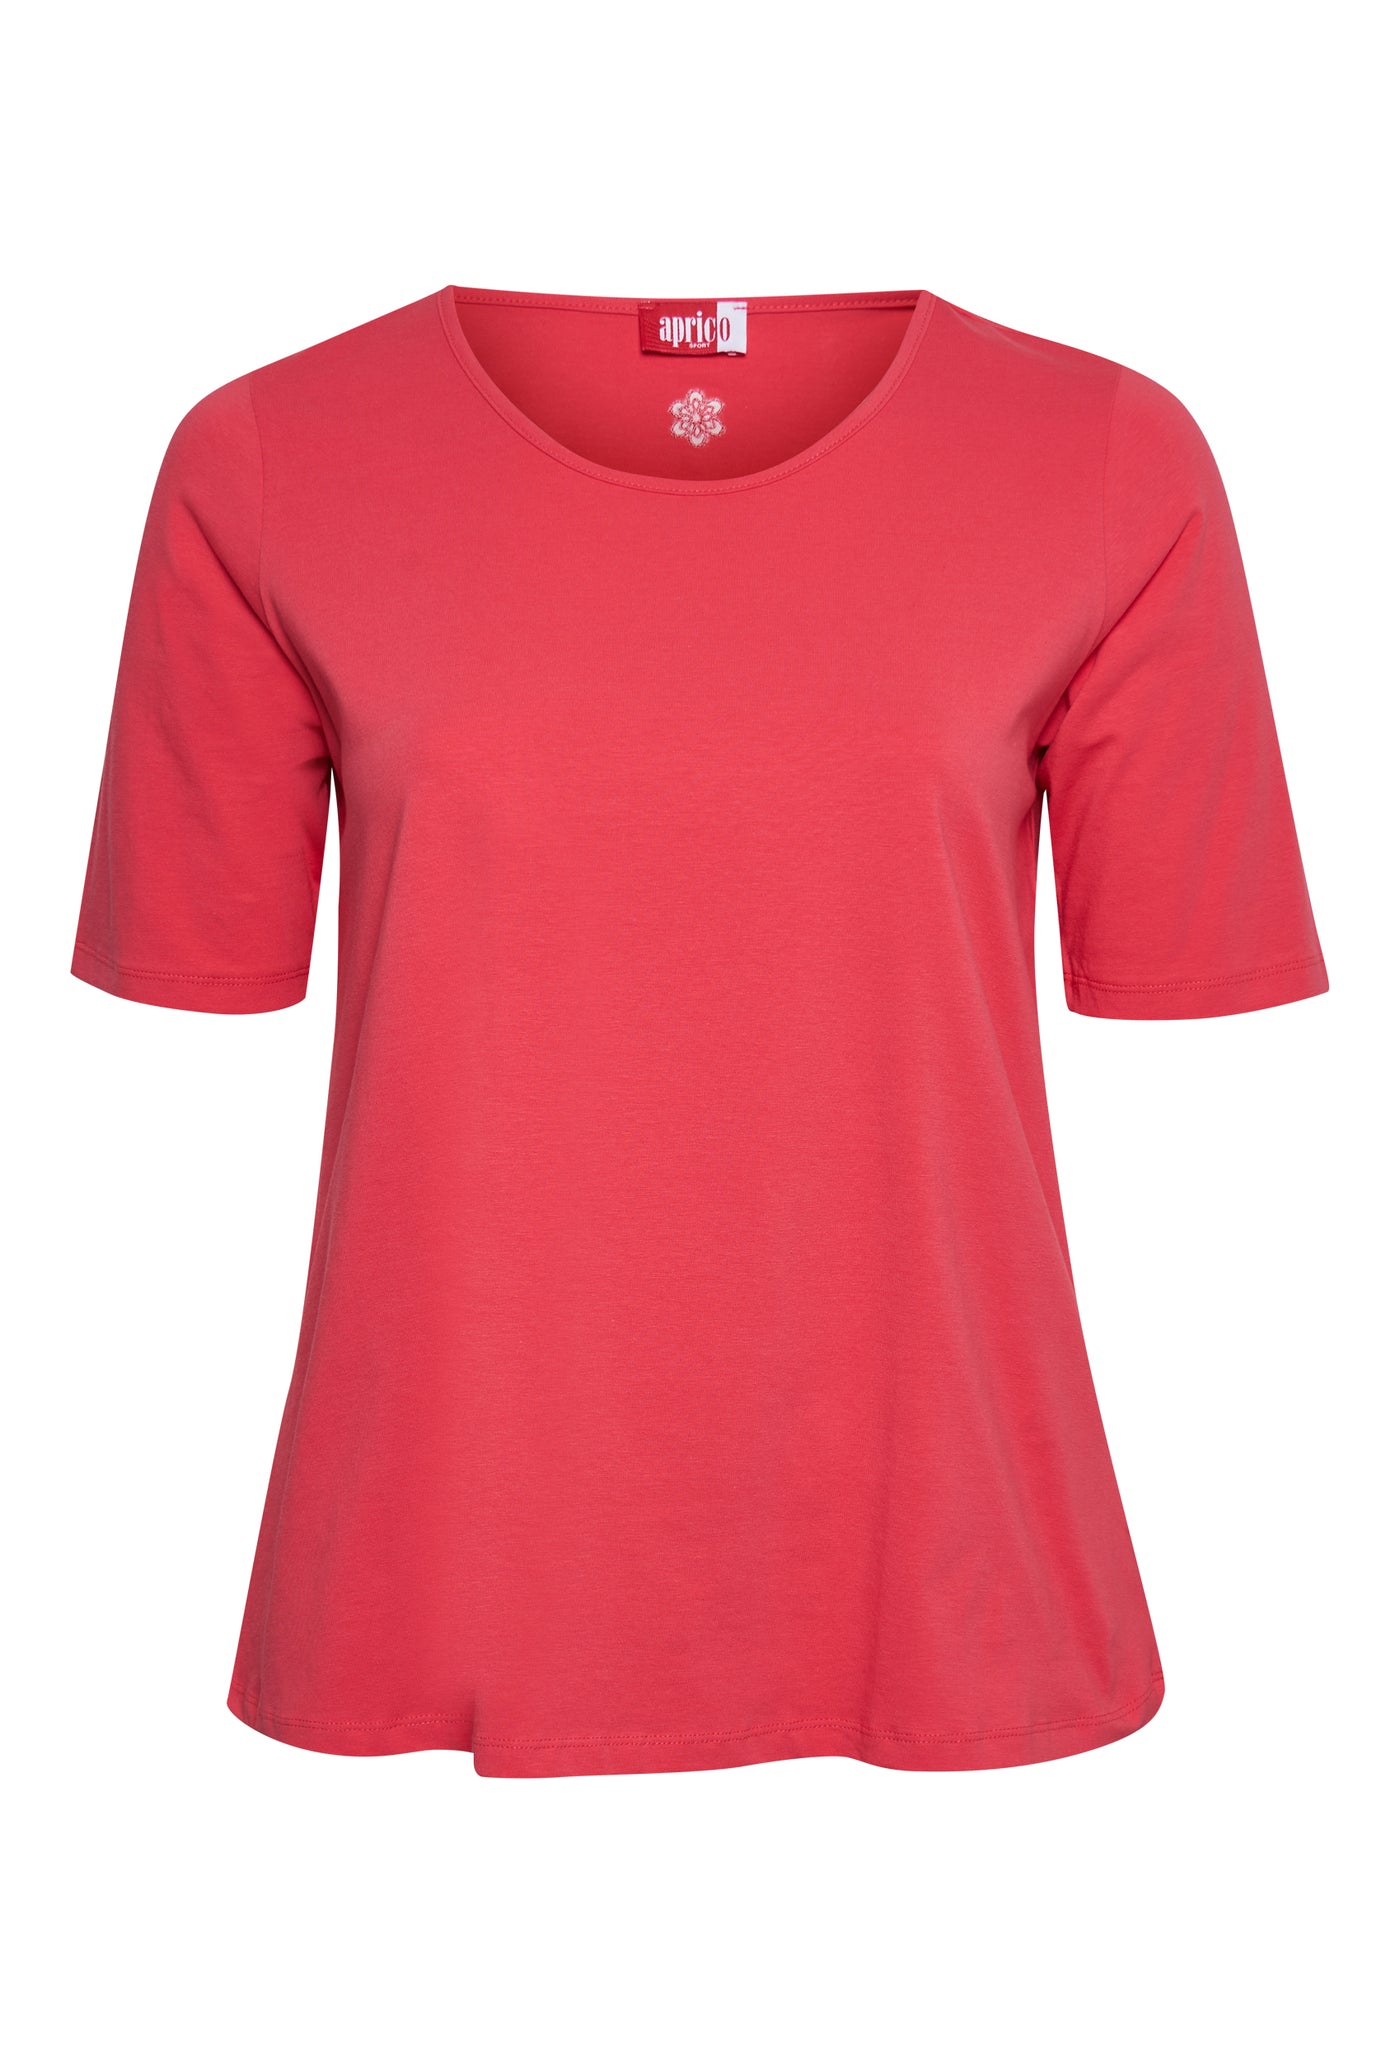 Aprico APIllinois T-Shirt 451 Coral